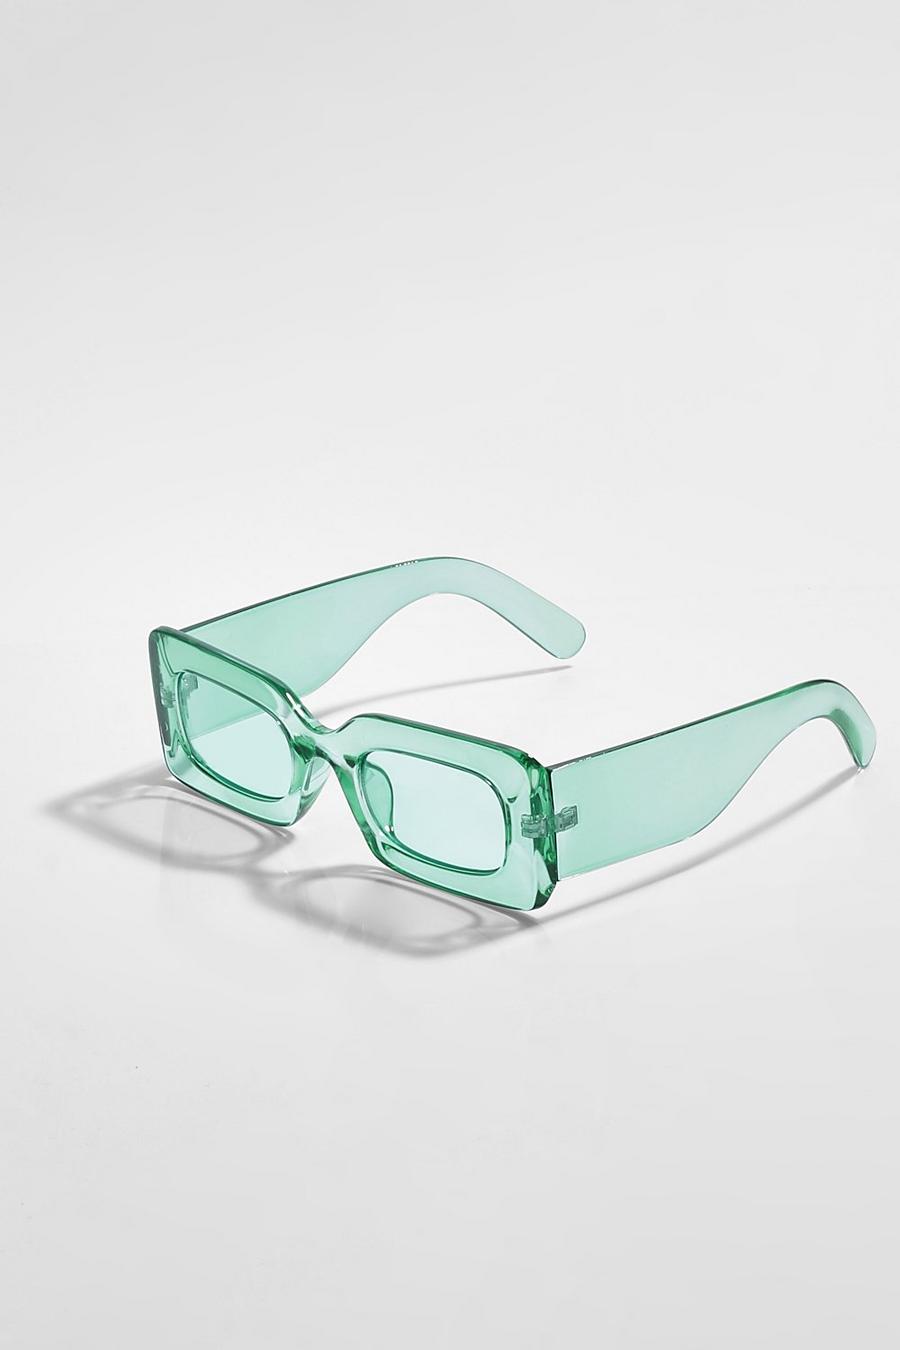 Klobige Kristall-Sonnenbrille, Turquoise blue